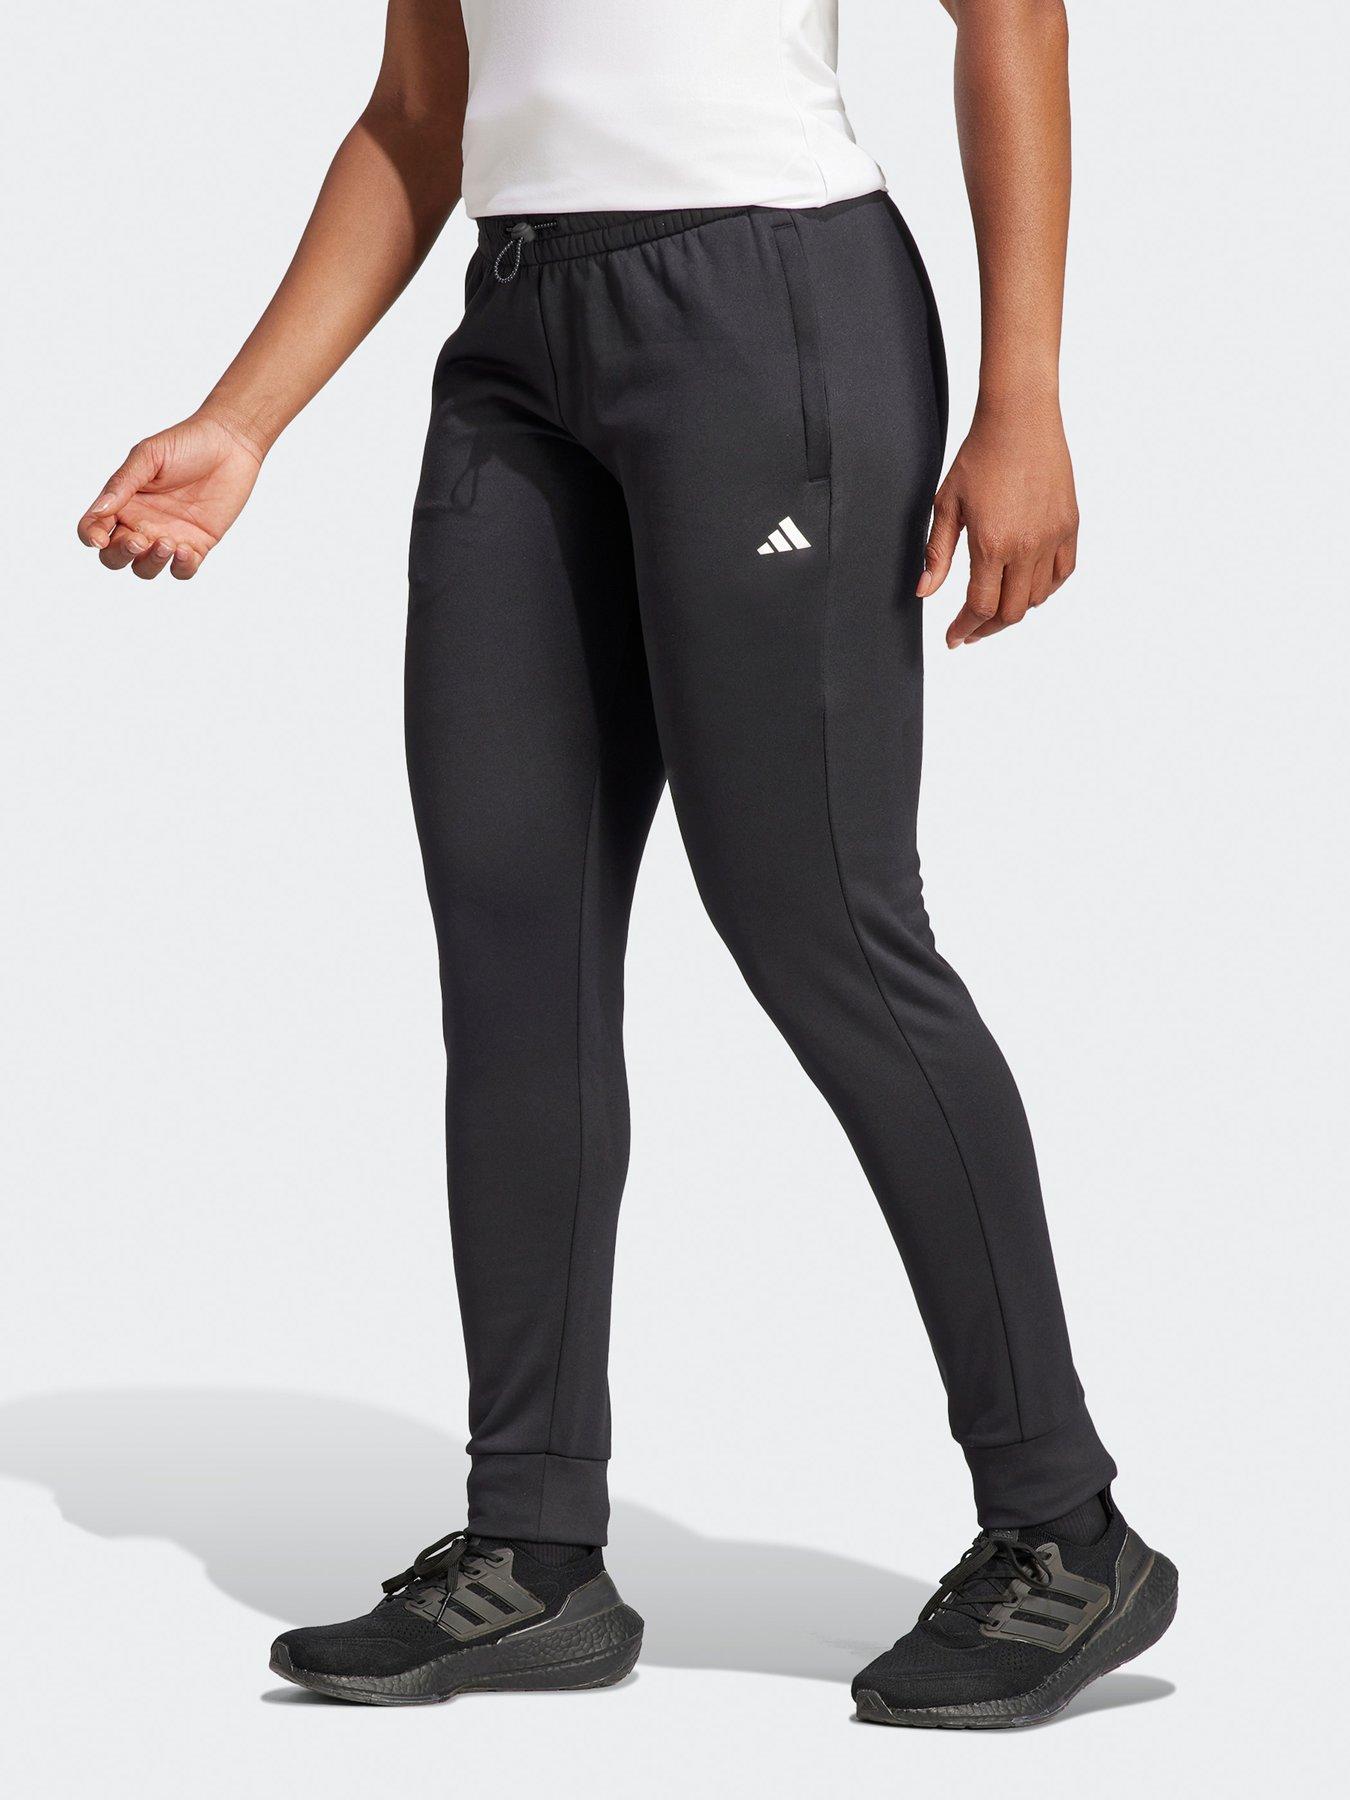 Adidas Women's 3 Stripes Tight Fit Elastic Waist Legging (Medium Grey  Heather/White, XL) 